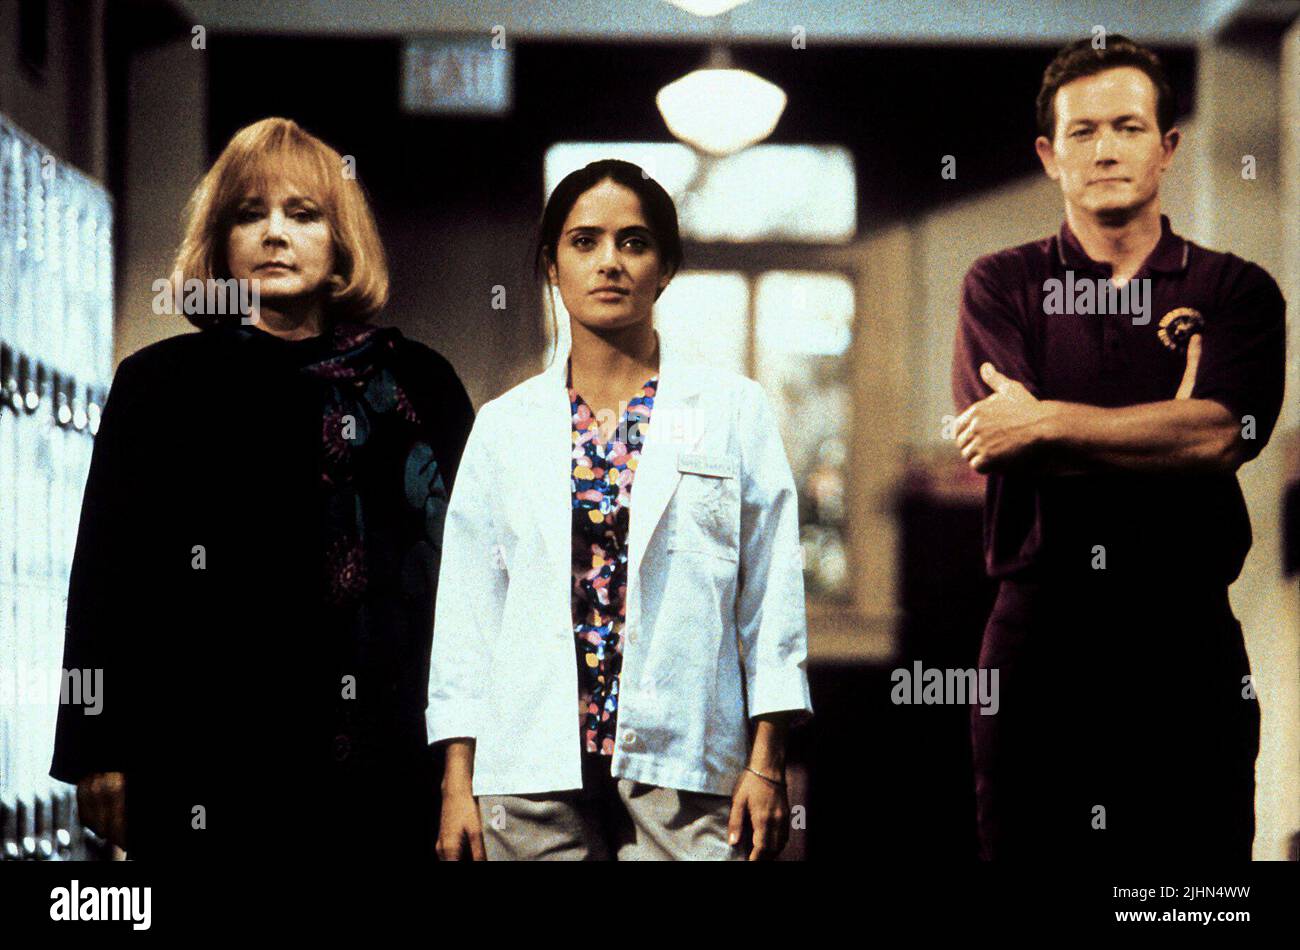 PIPER LAURIE, SALMA HAYEK, ROBERT PATRICK, THE FACULTY, 1998 Stock Photo